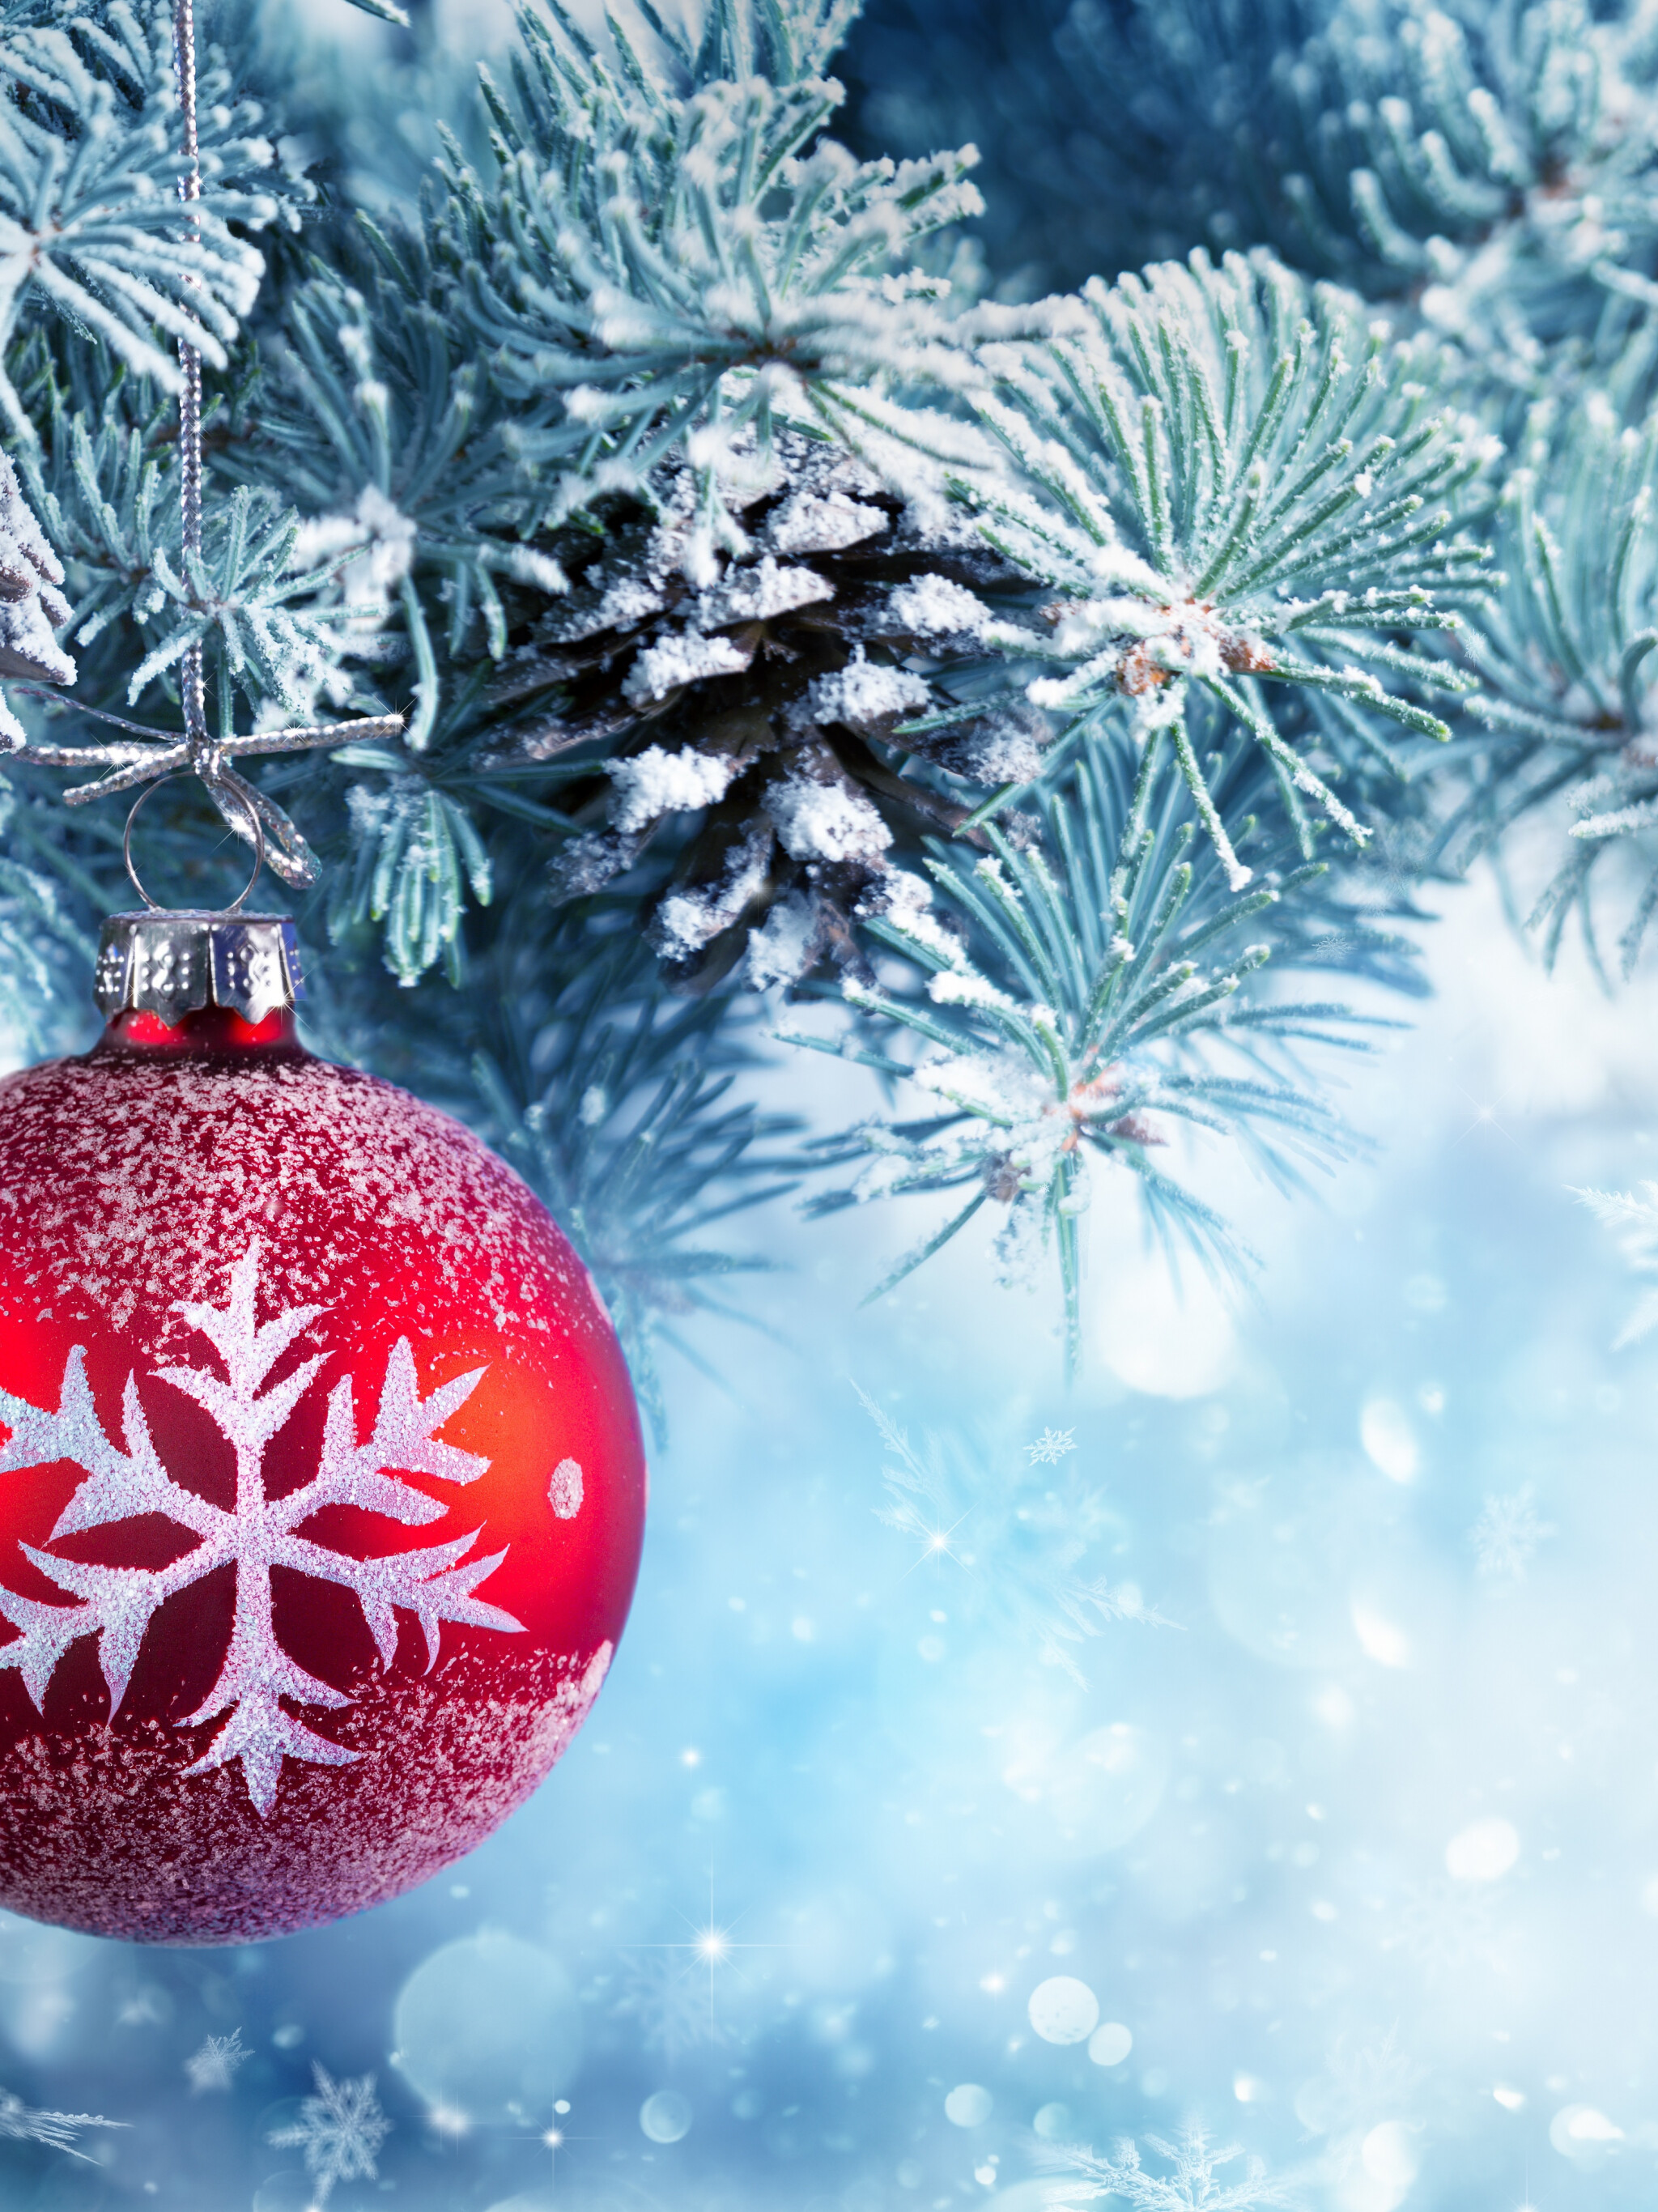 Christmas Ornament: Snow, Frost, Xmas ball, Pine trees. 2050x2740 HD Wallpaper.